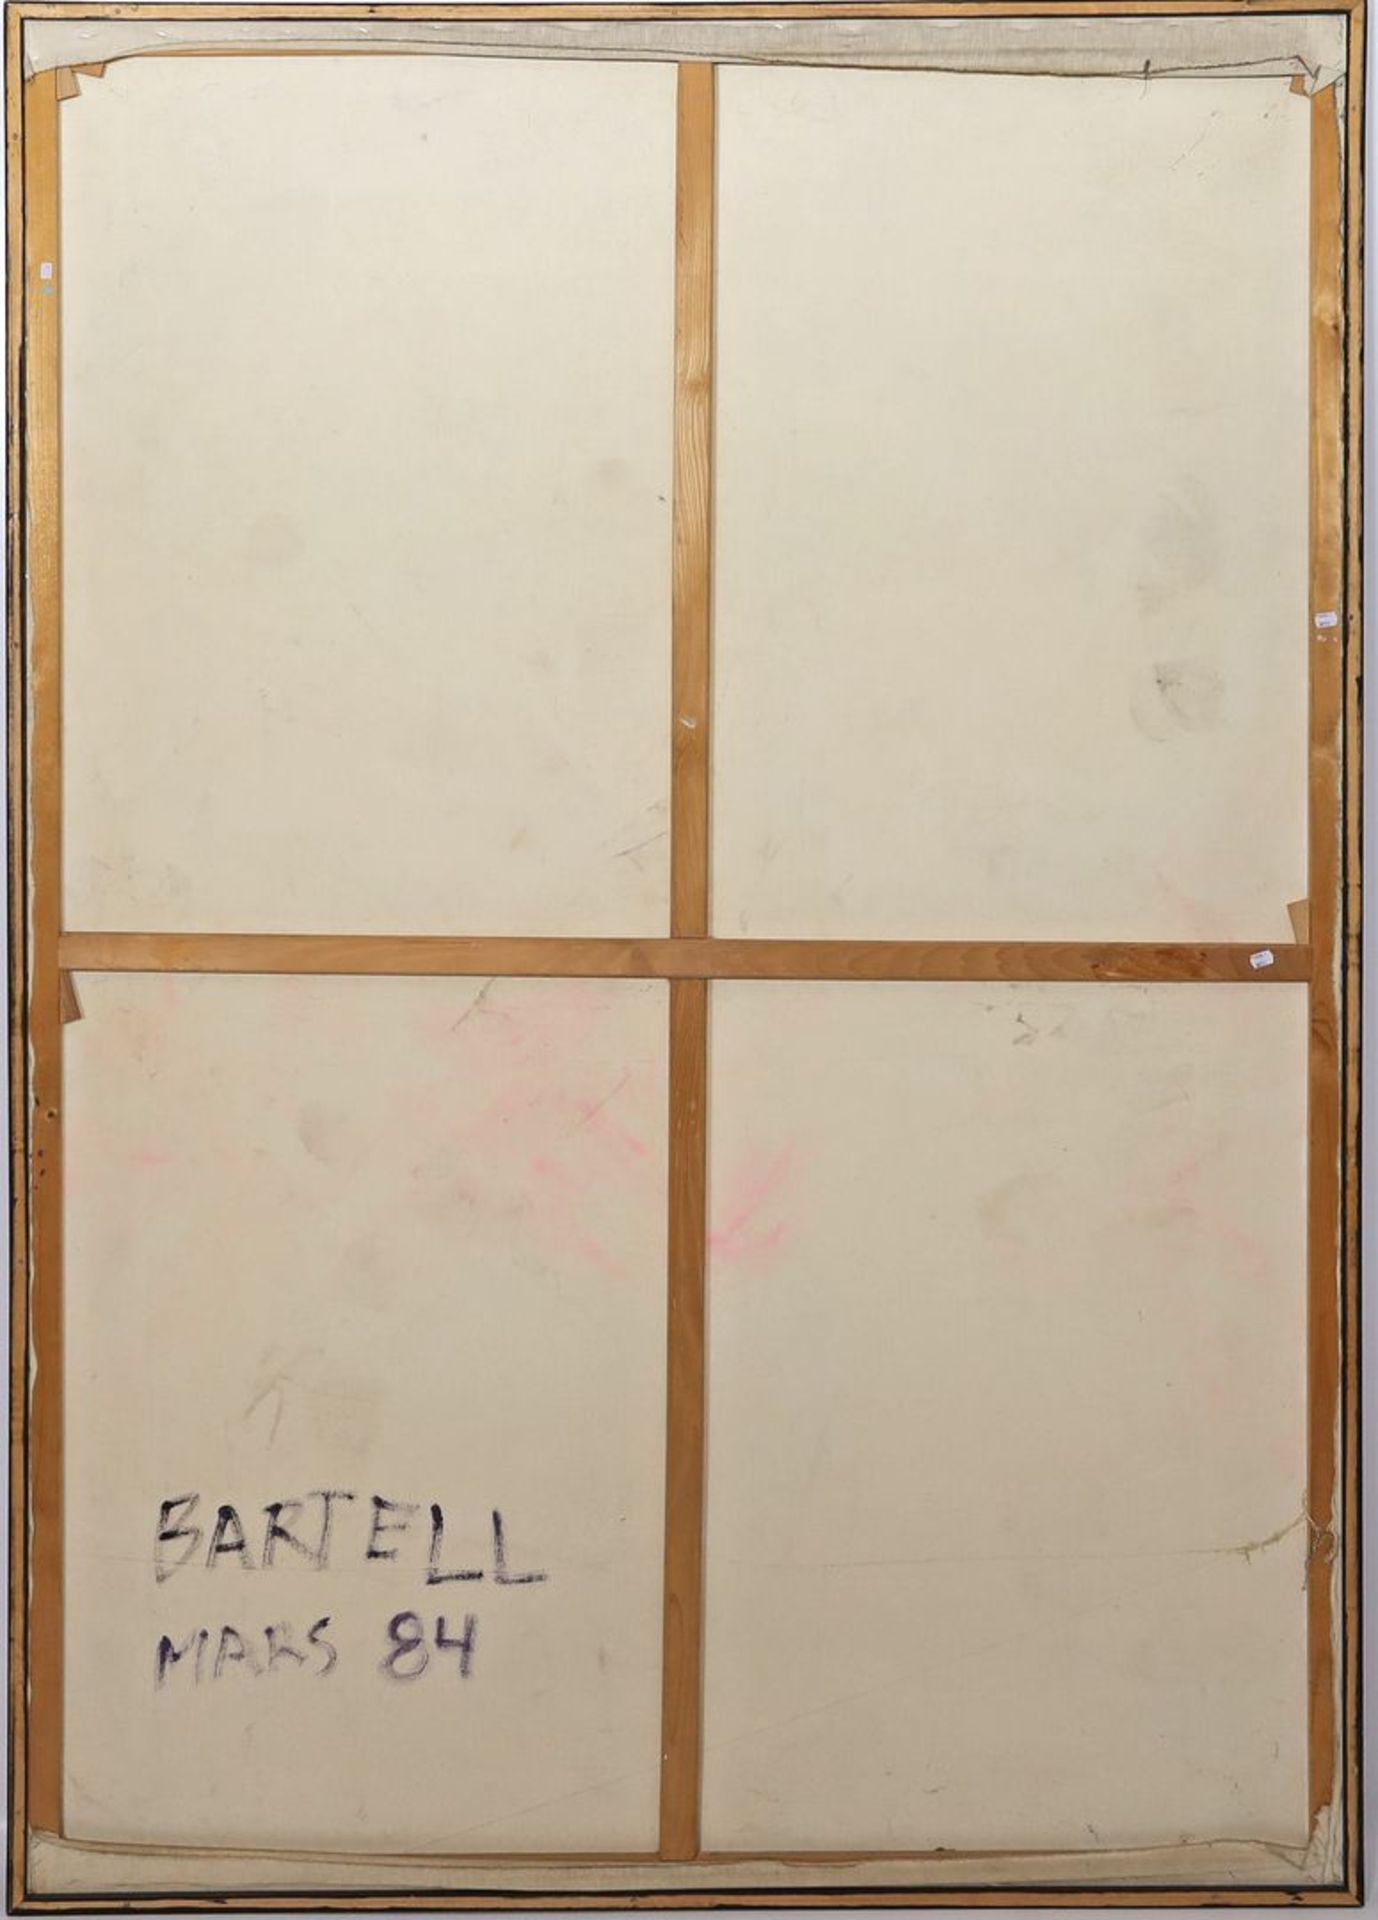 Bartell, Ira (geb. 1954 in New York) - Image 2 of 2